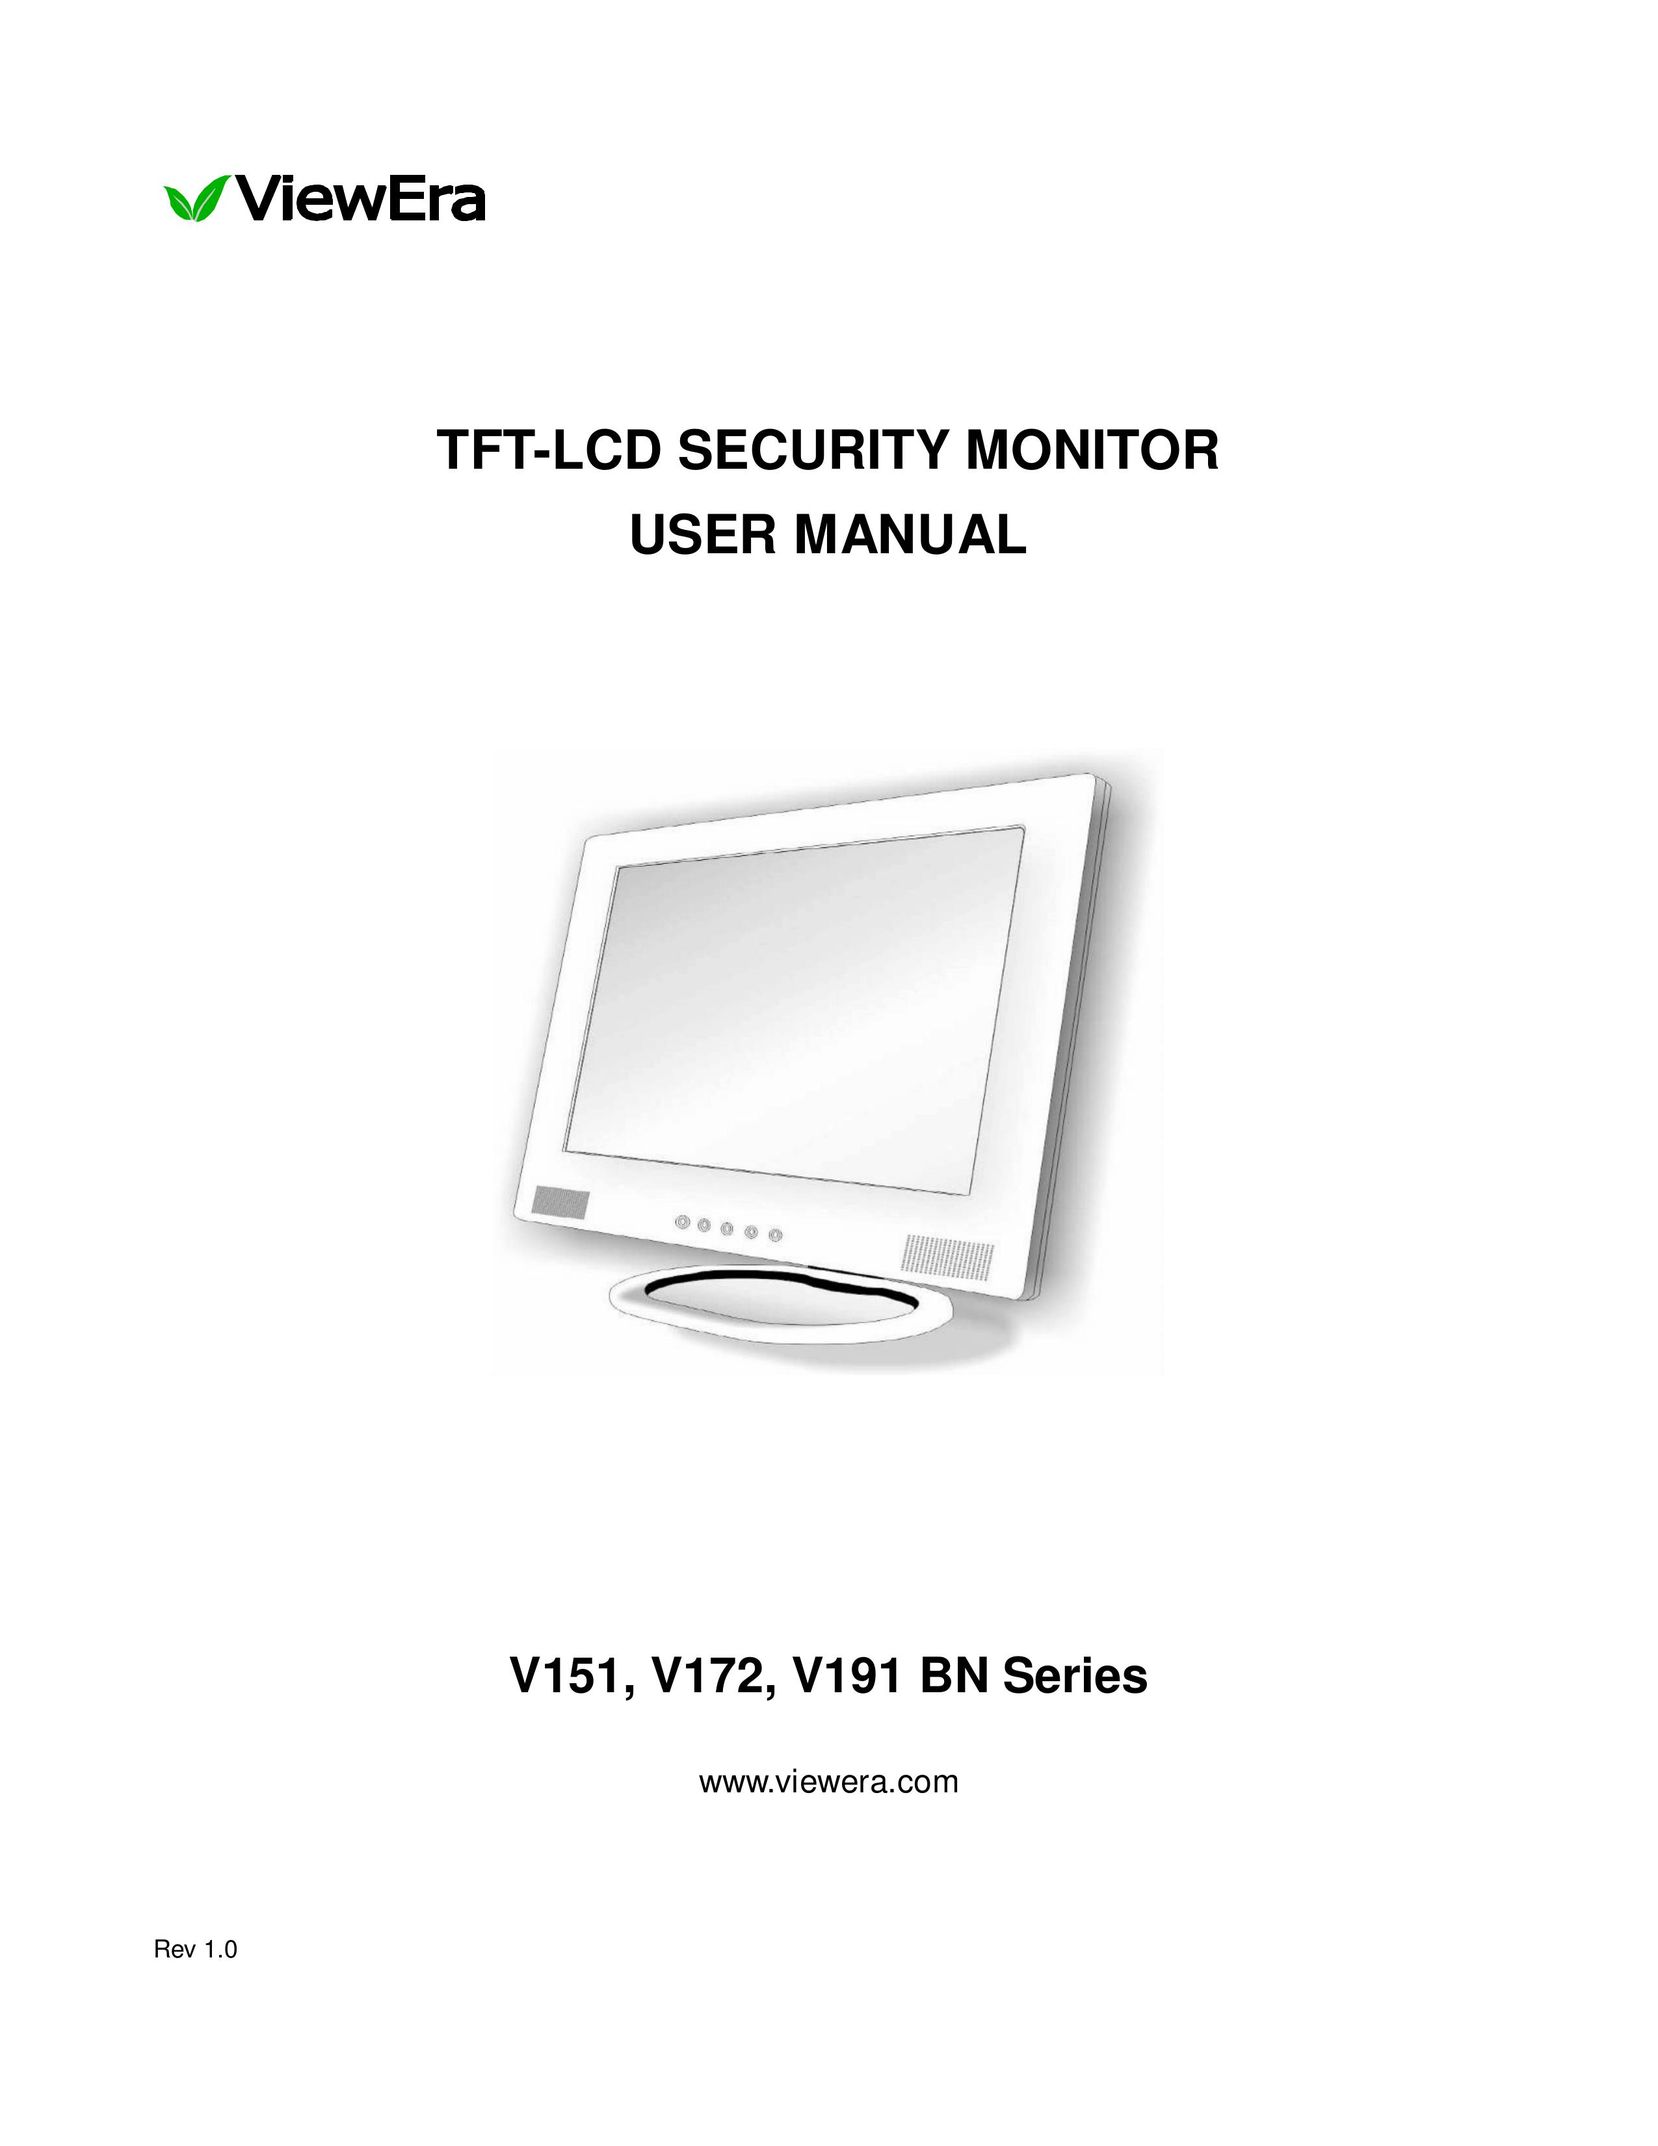 ViewEra V191 BN Series Car Video System User Manual